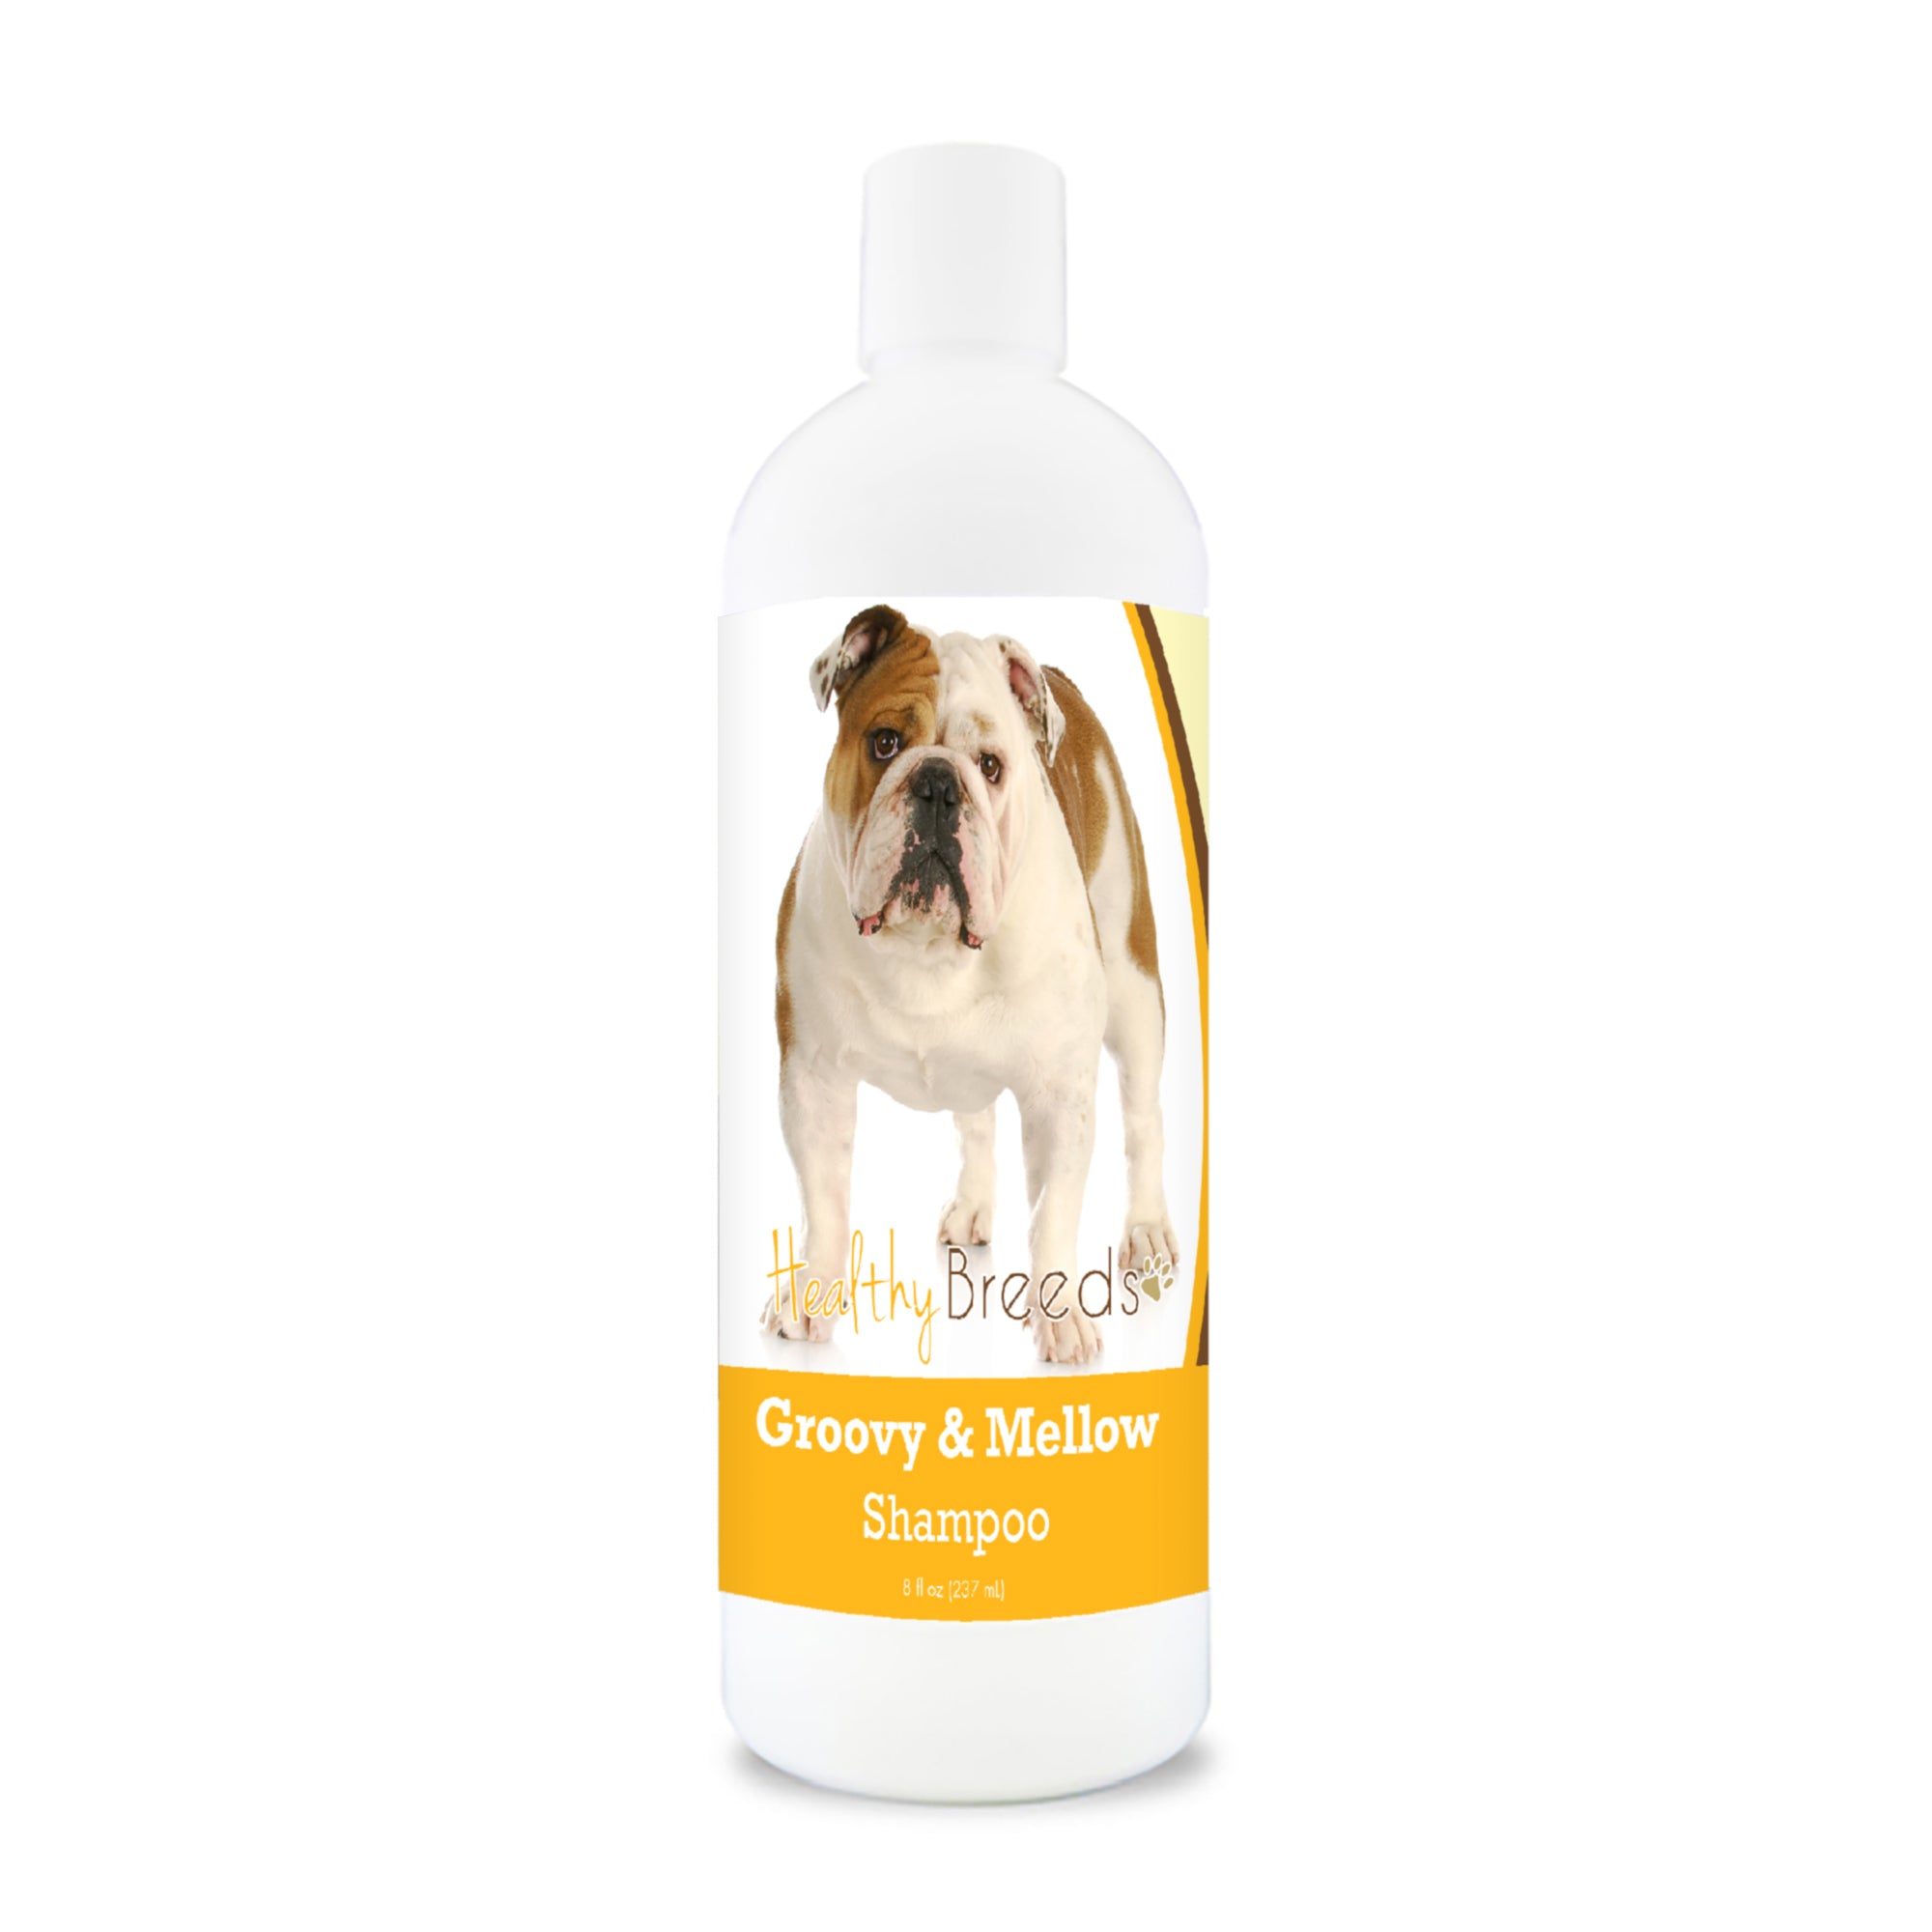 Bulldog Groovy & Mellow Shampoo 8 oz